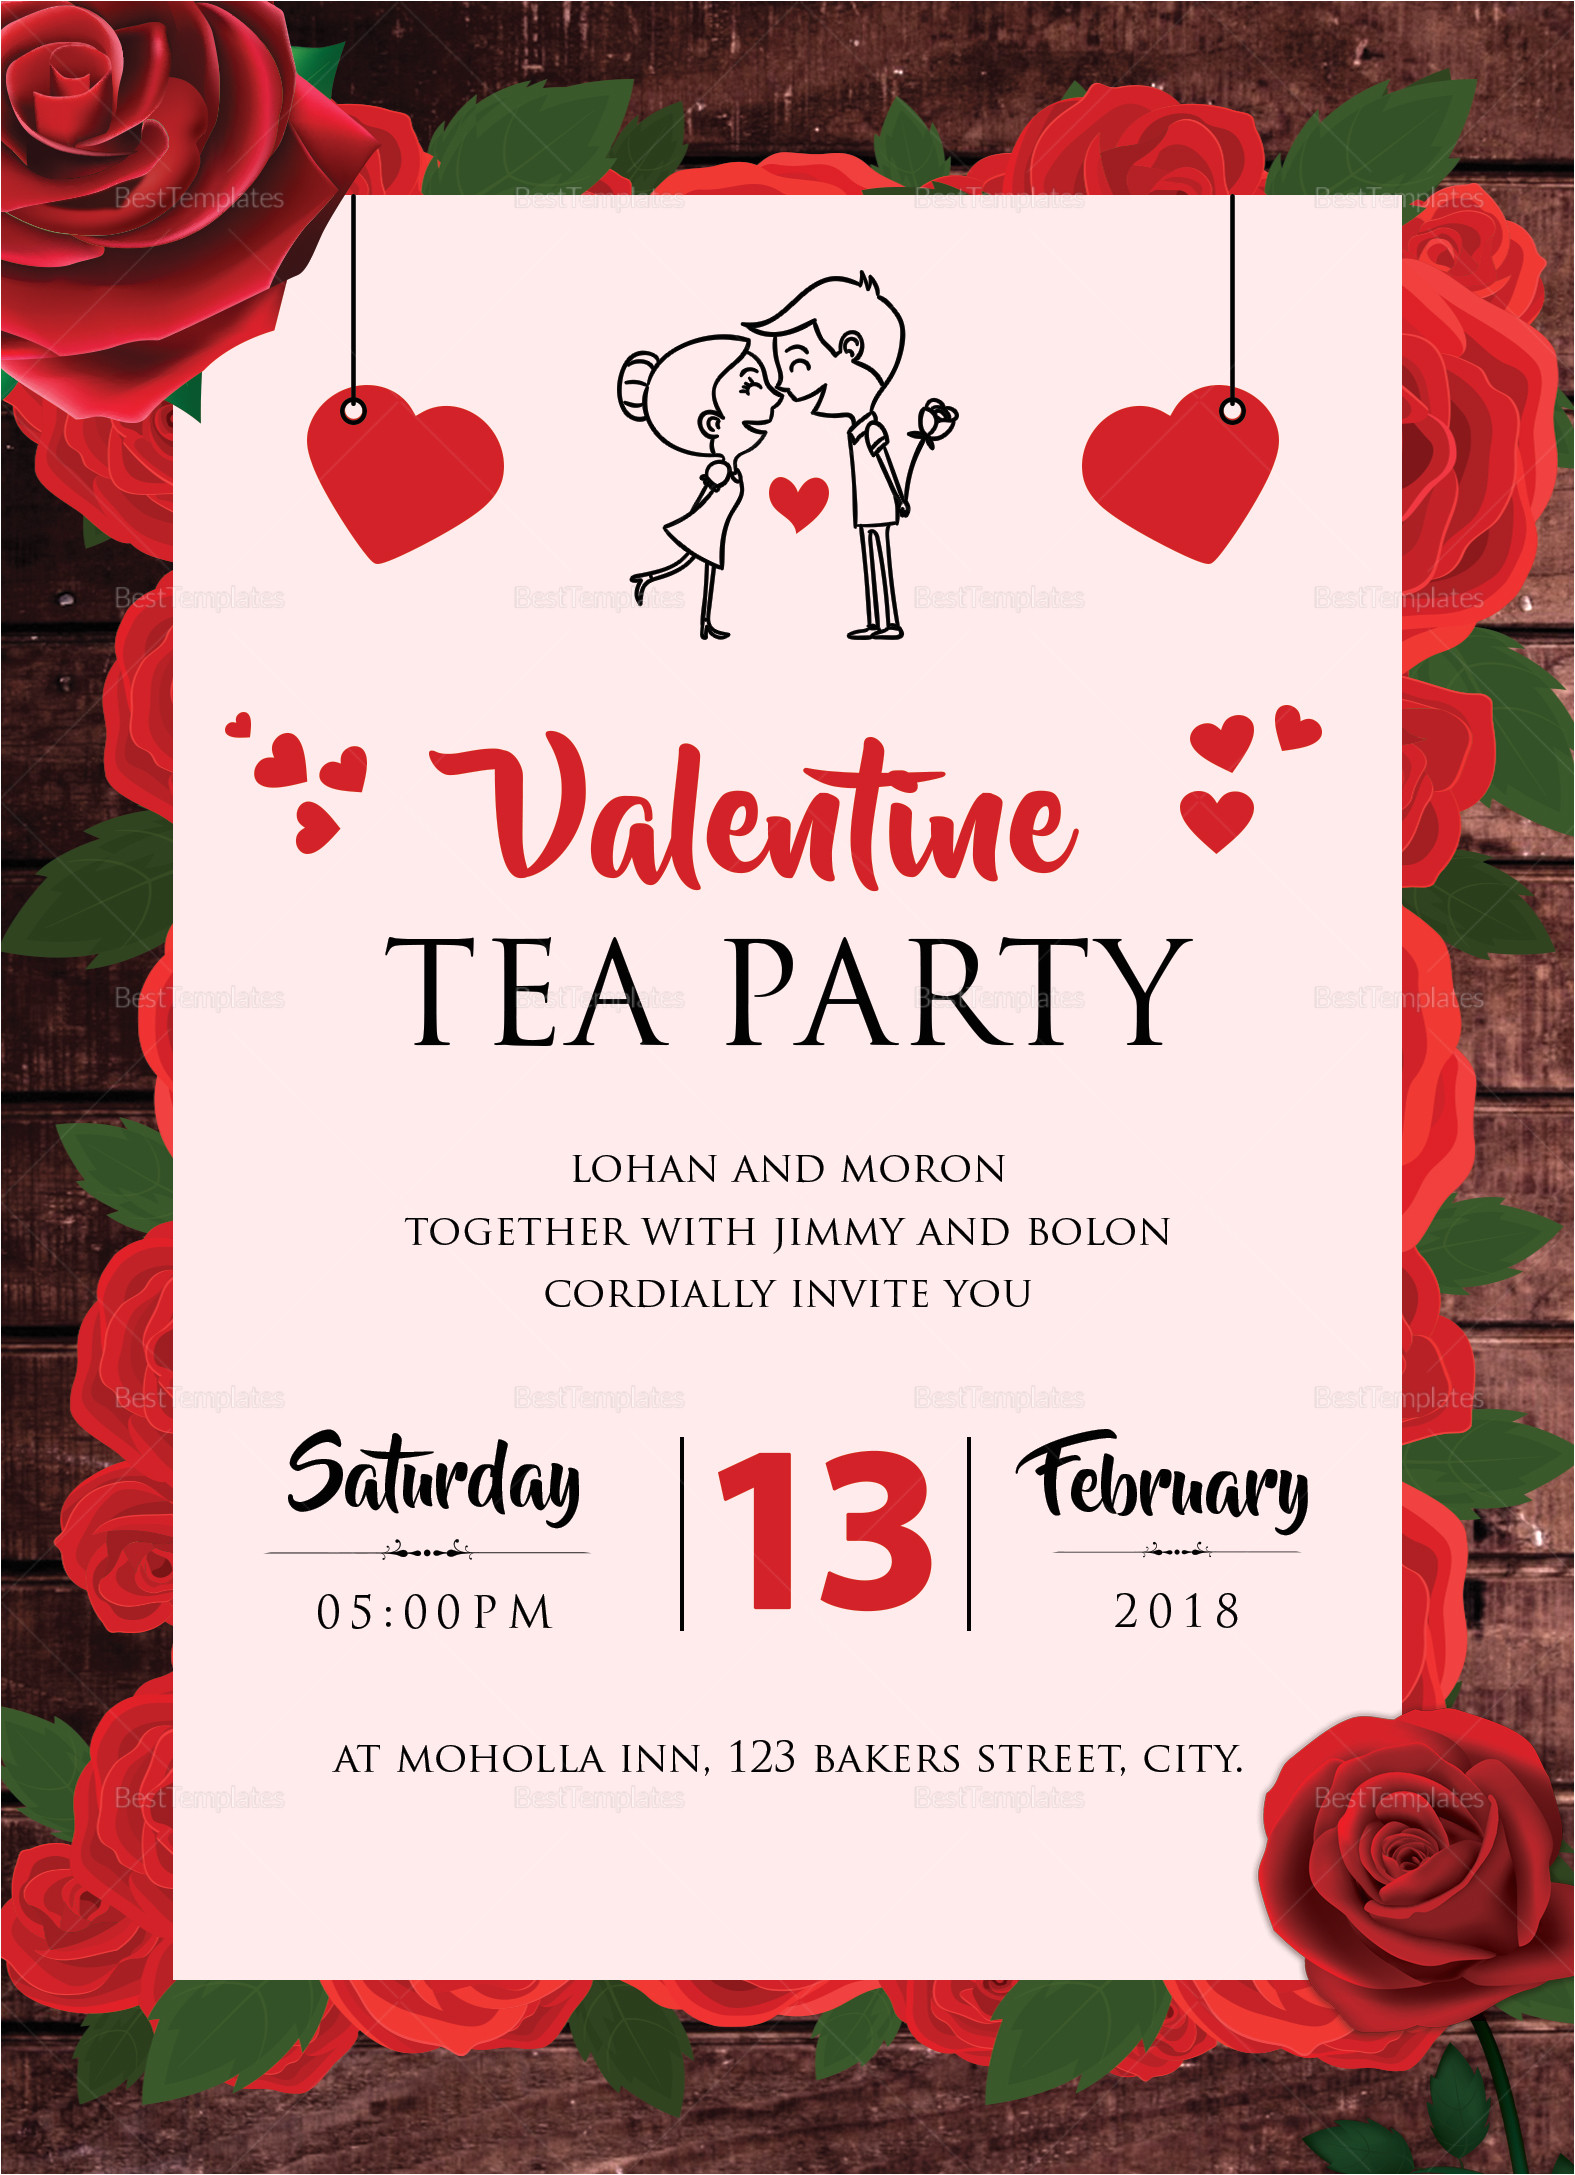 Tea Party Invitation Template Word Valentine Tea Party Invitation Design Template In Word